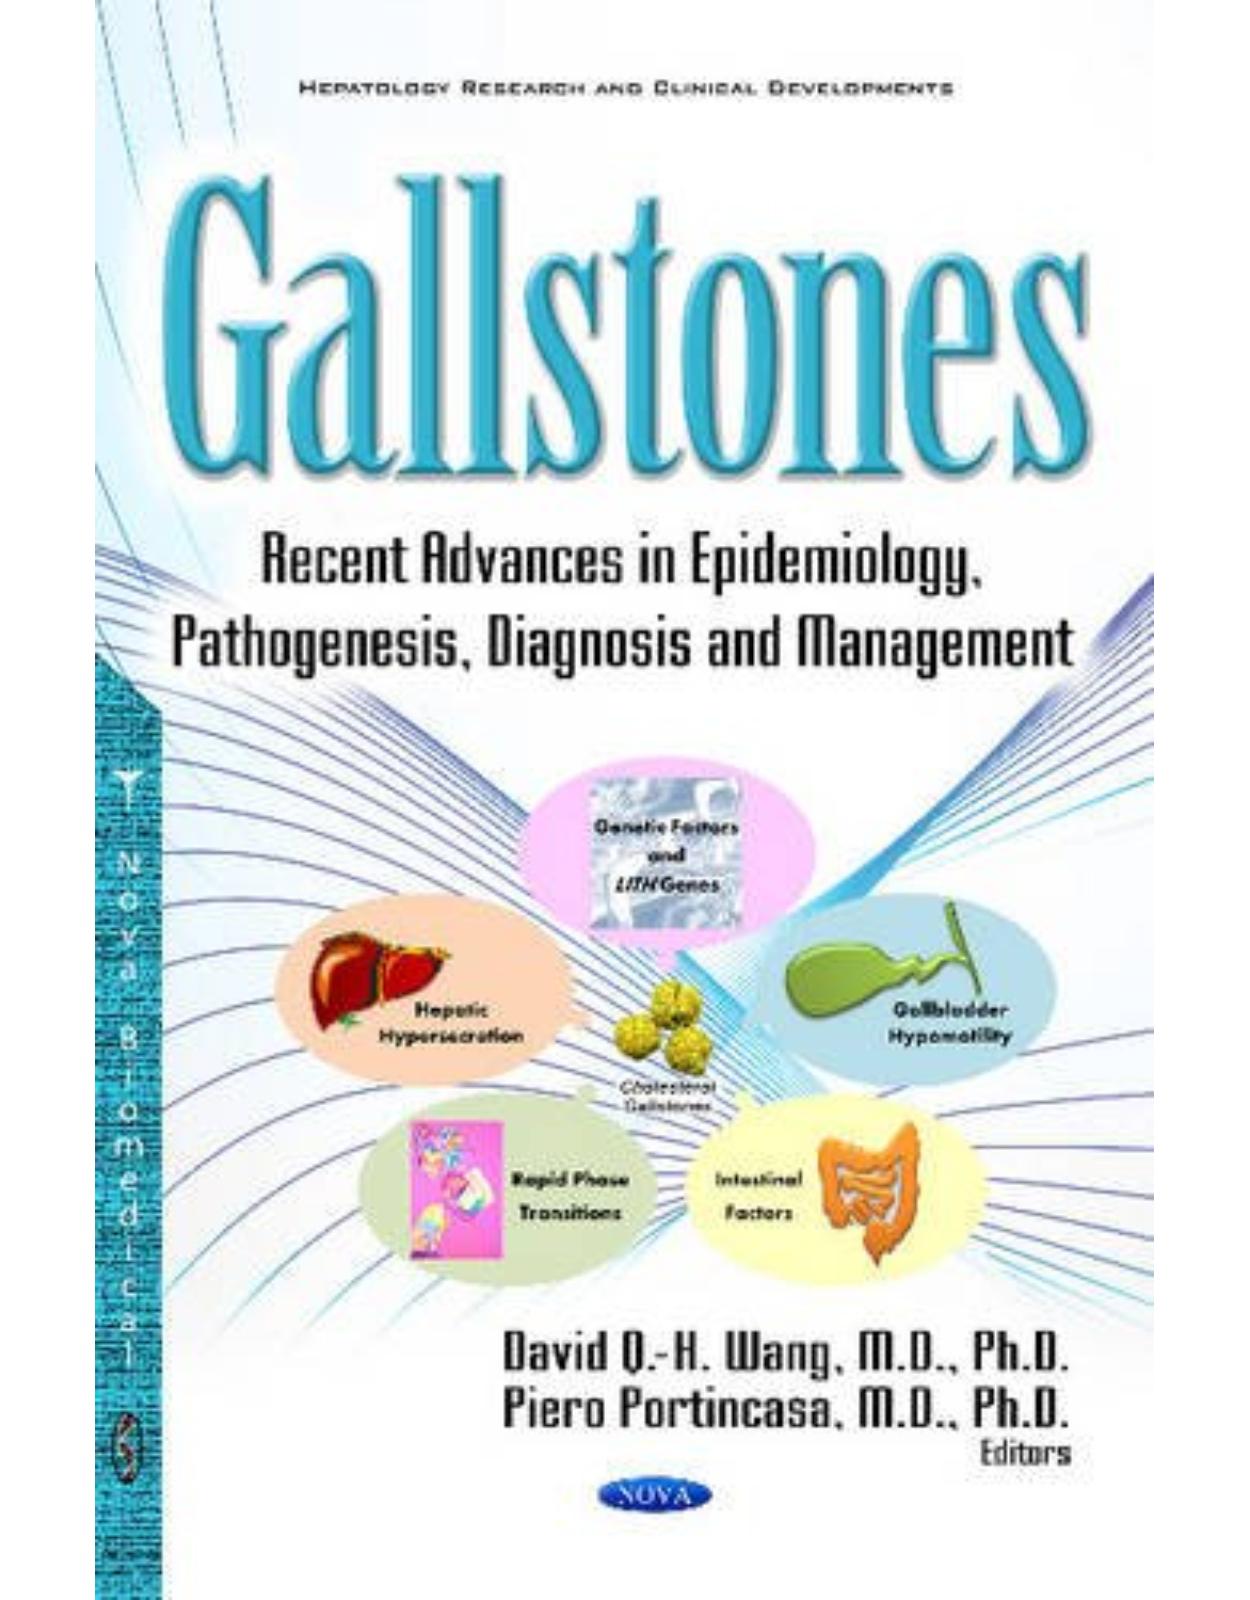 Gallstones: Recent Advances in Epidemiology, Pathogenesis, Diagnosis & Management